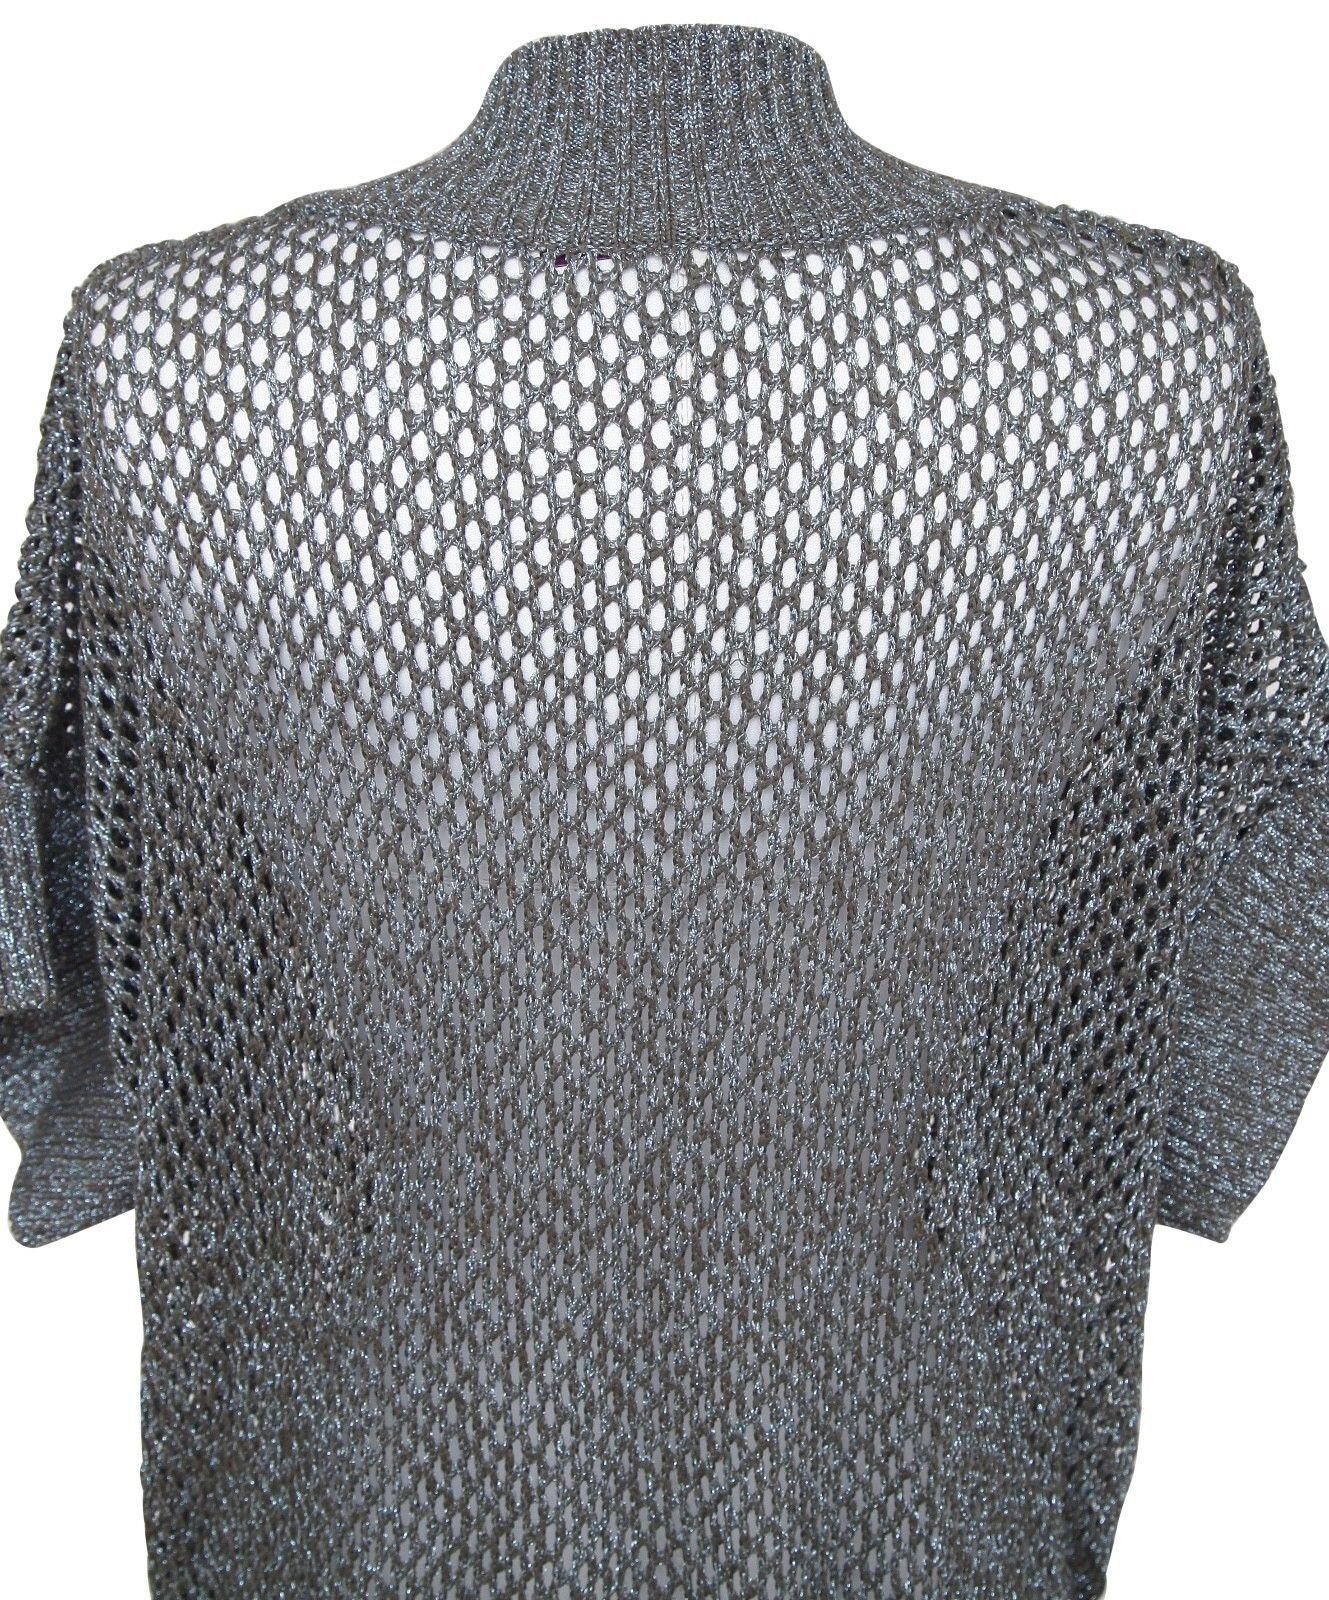 STELLA MCCARTNEY Sweater Tunic Knit Metallic Blue V-Neck Long Cotton Blend Sz 38 For Sale 3